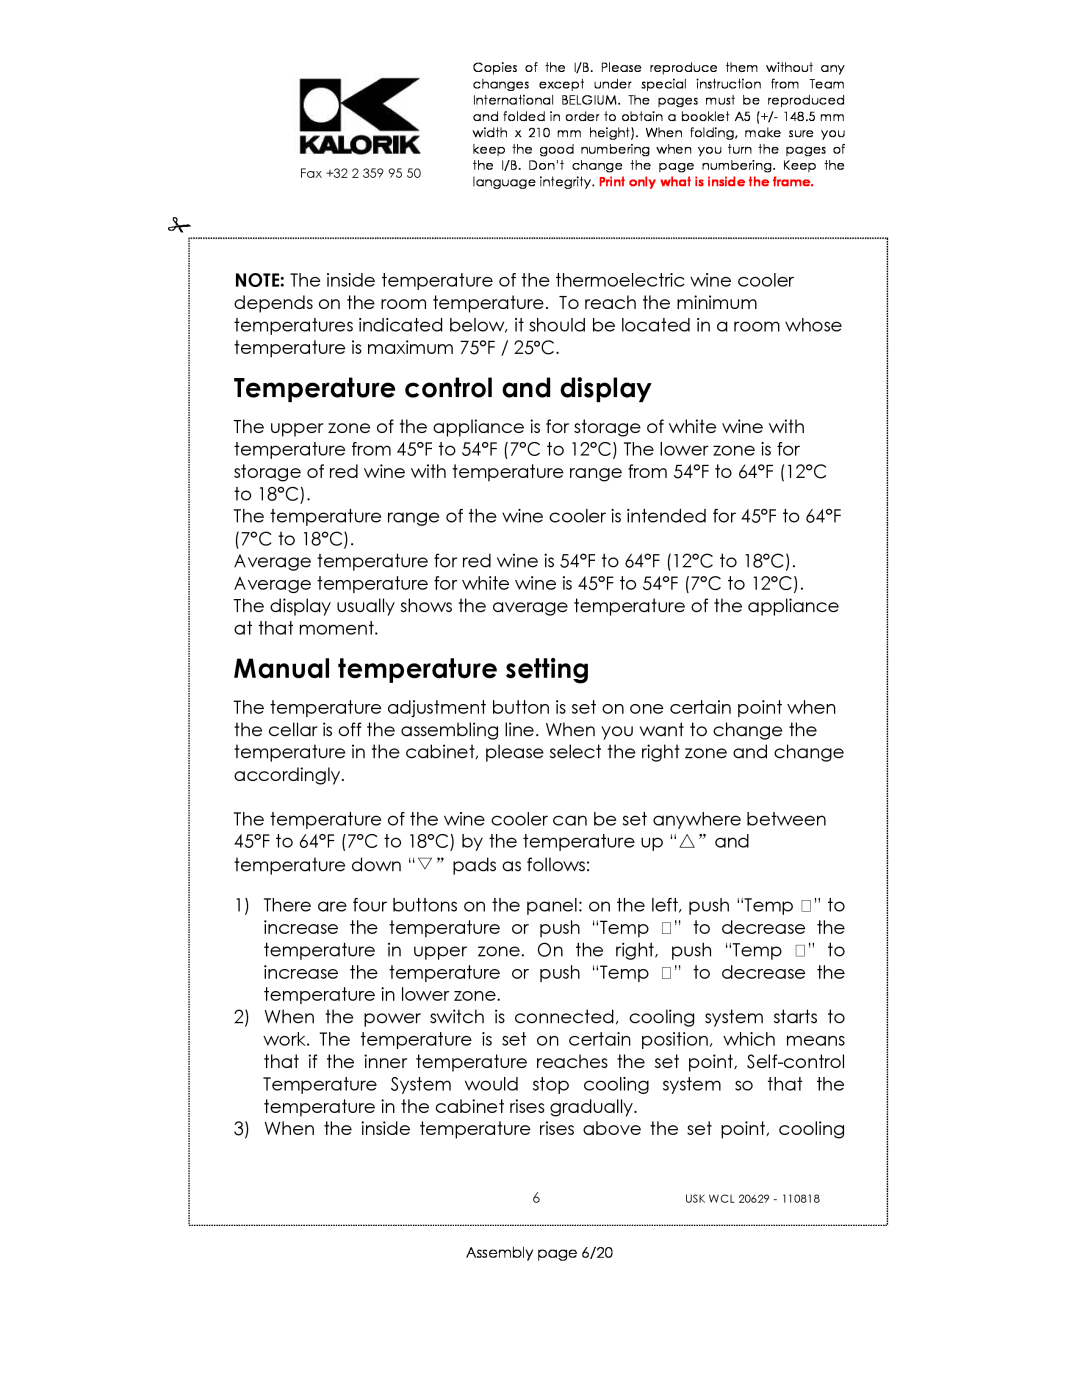 Kalorik USK WCL 20629 manual Temperature control and display, Manual temperature setting, Assembly page 6/20 